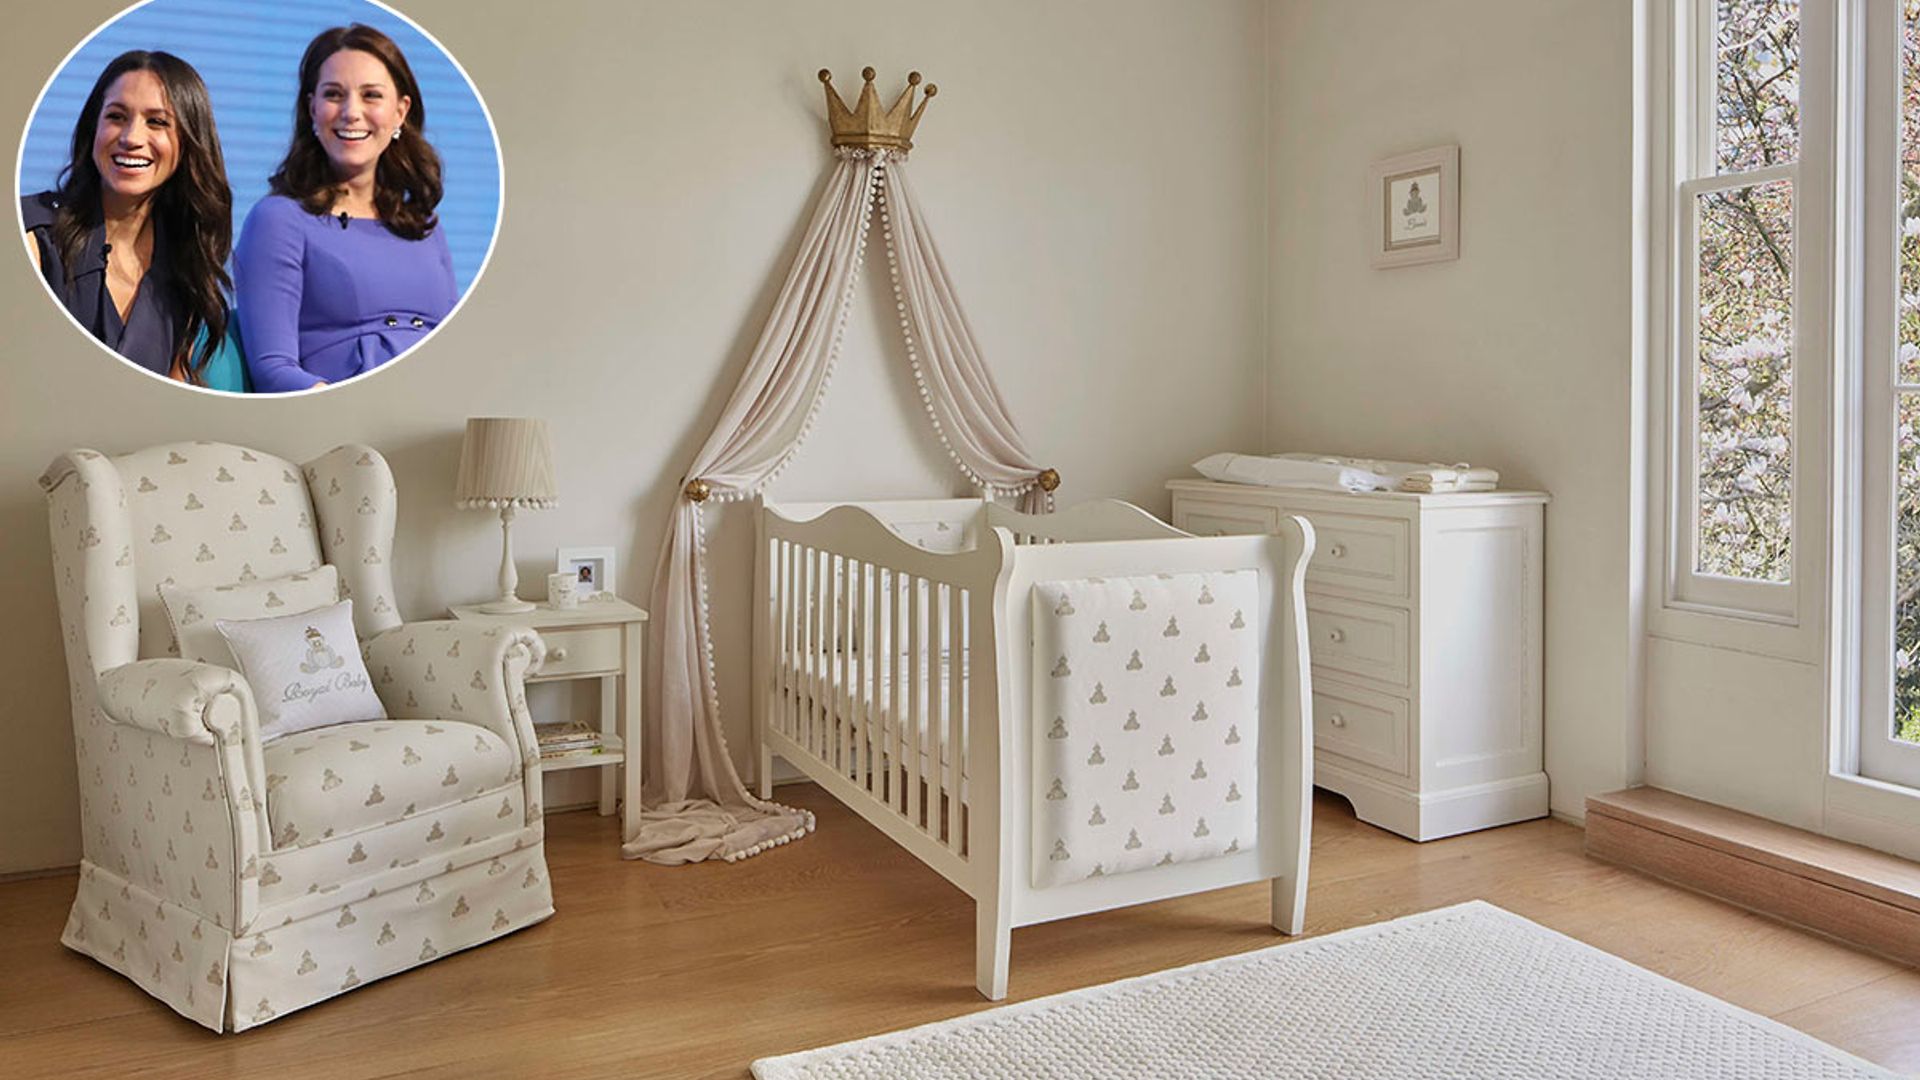 Blue Almonds royal nursery furniture